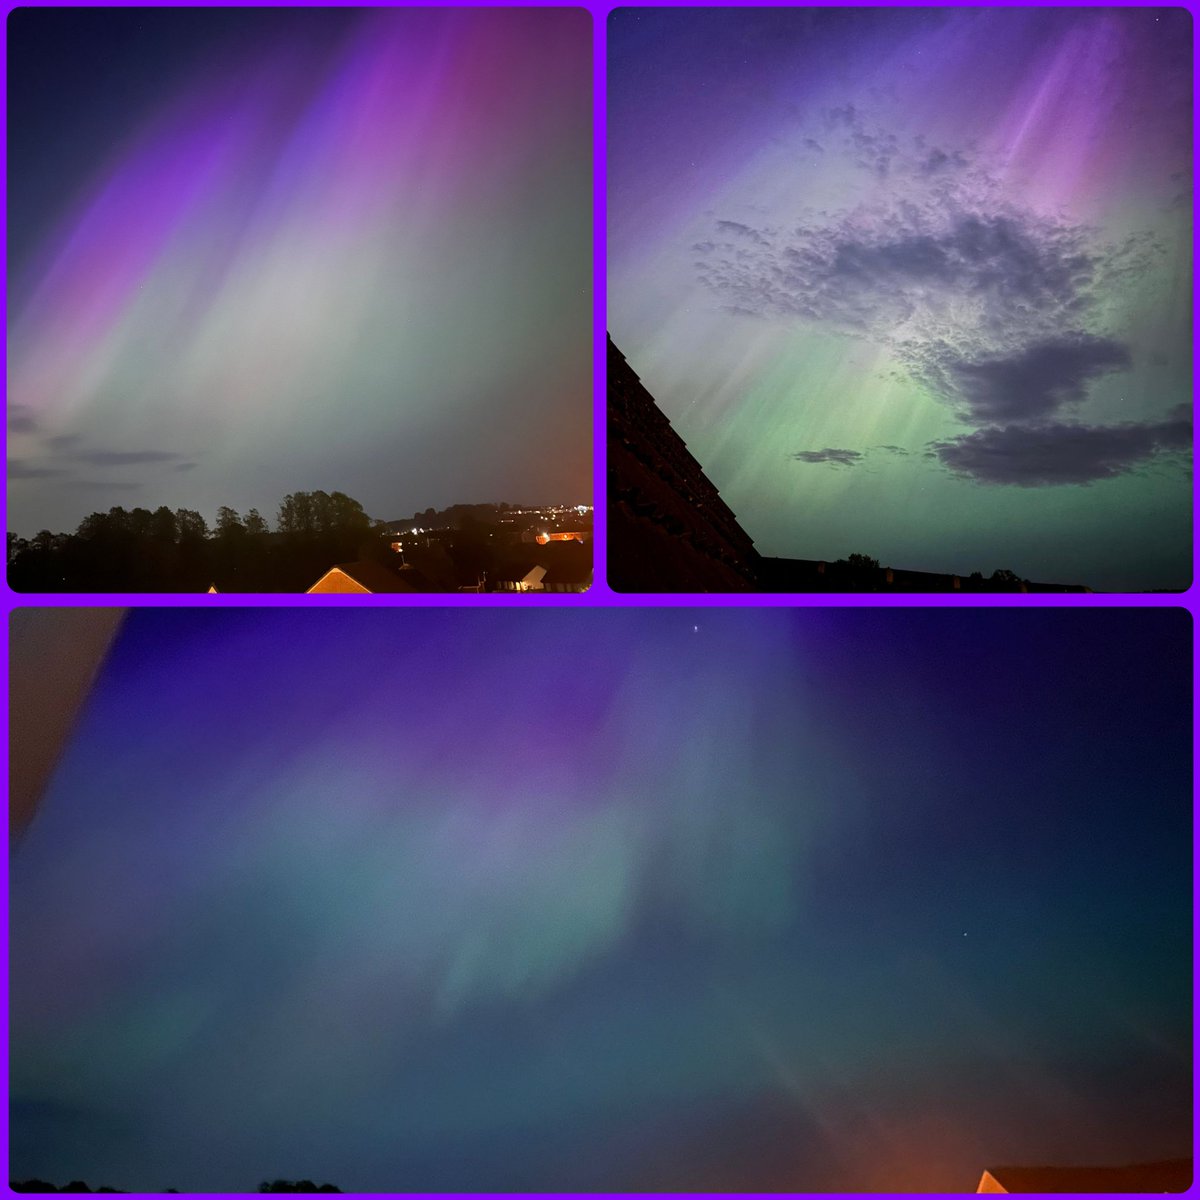 Amazing views of aurora borealis tonight over Barrhead! #scienceinaction